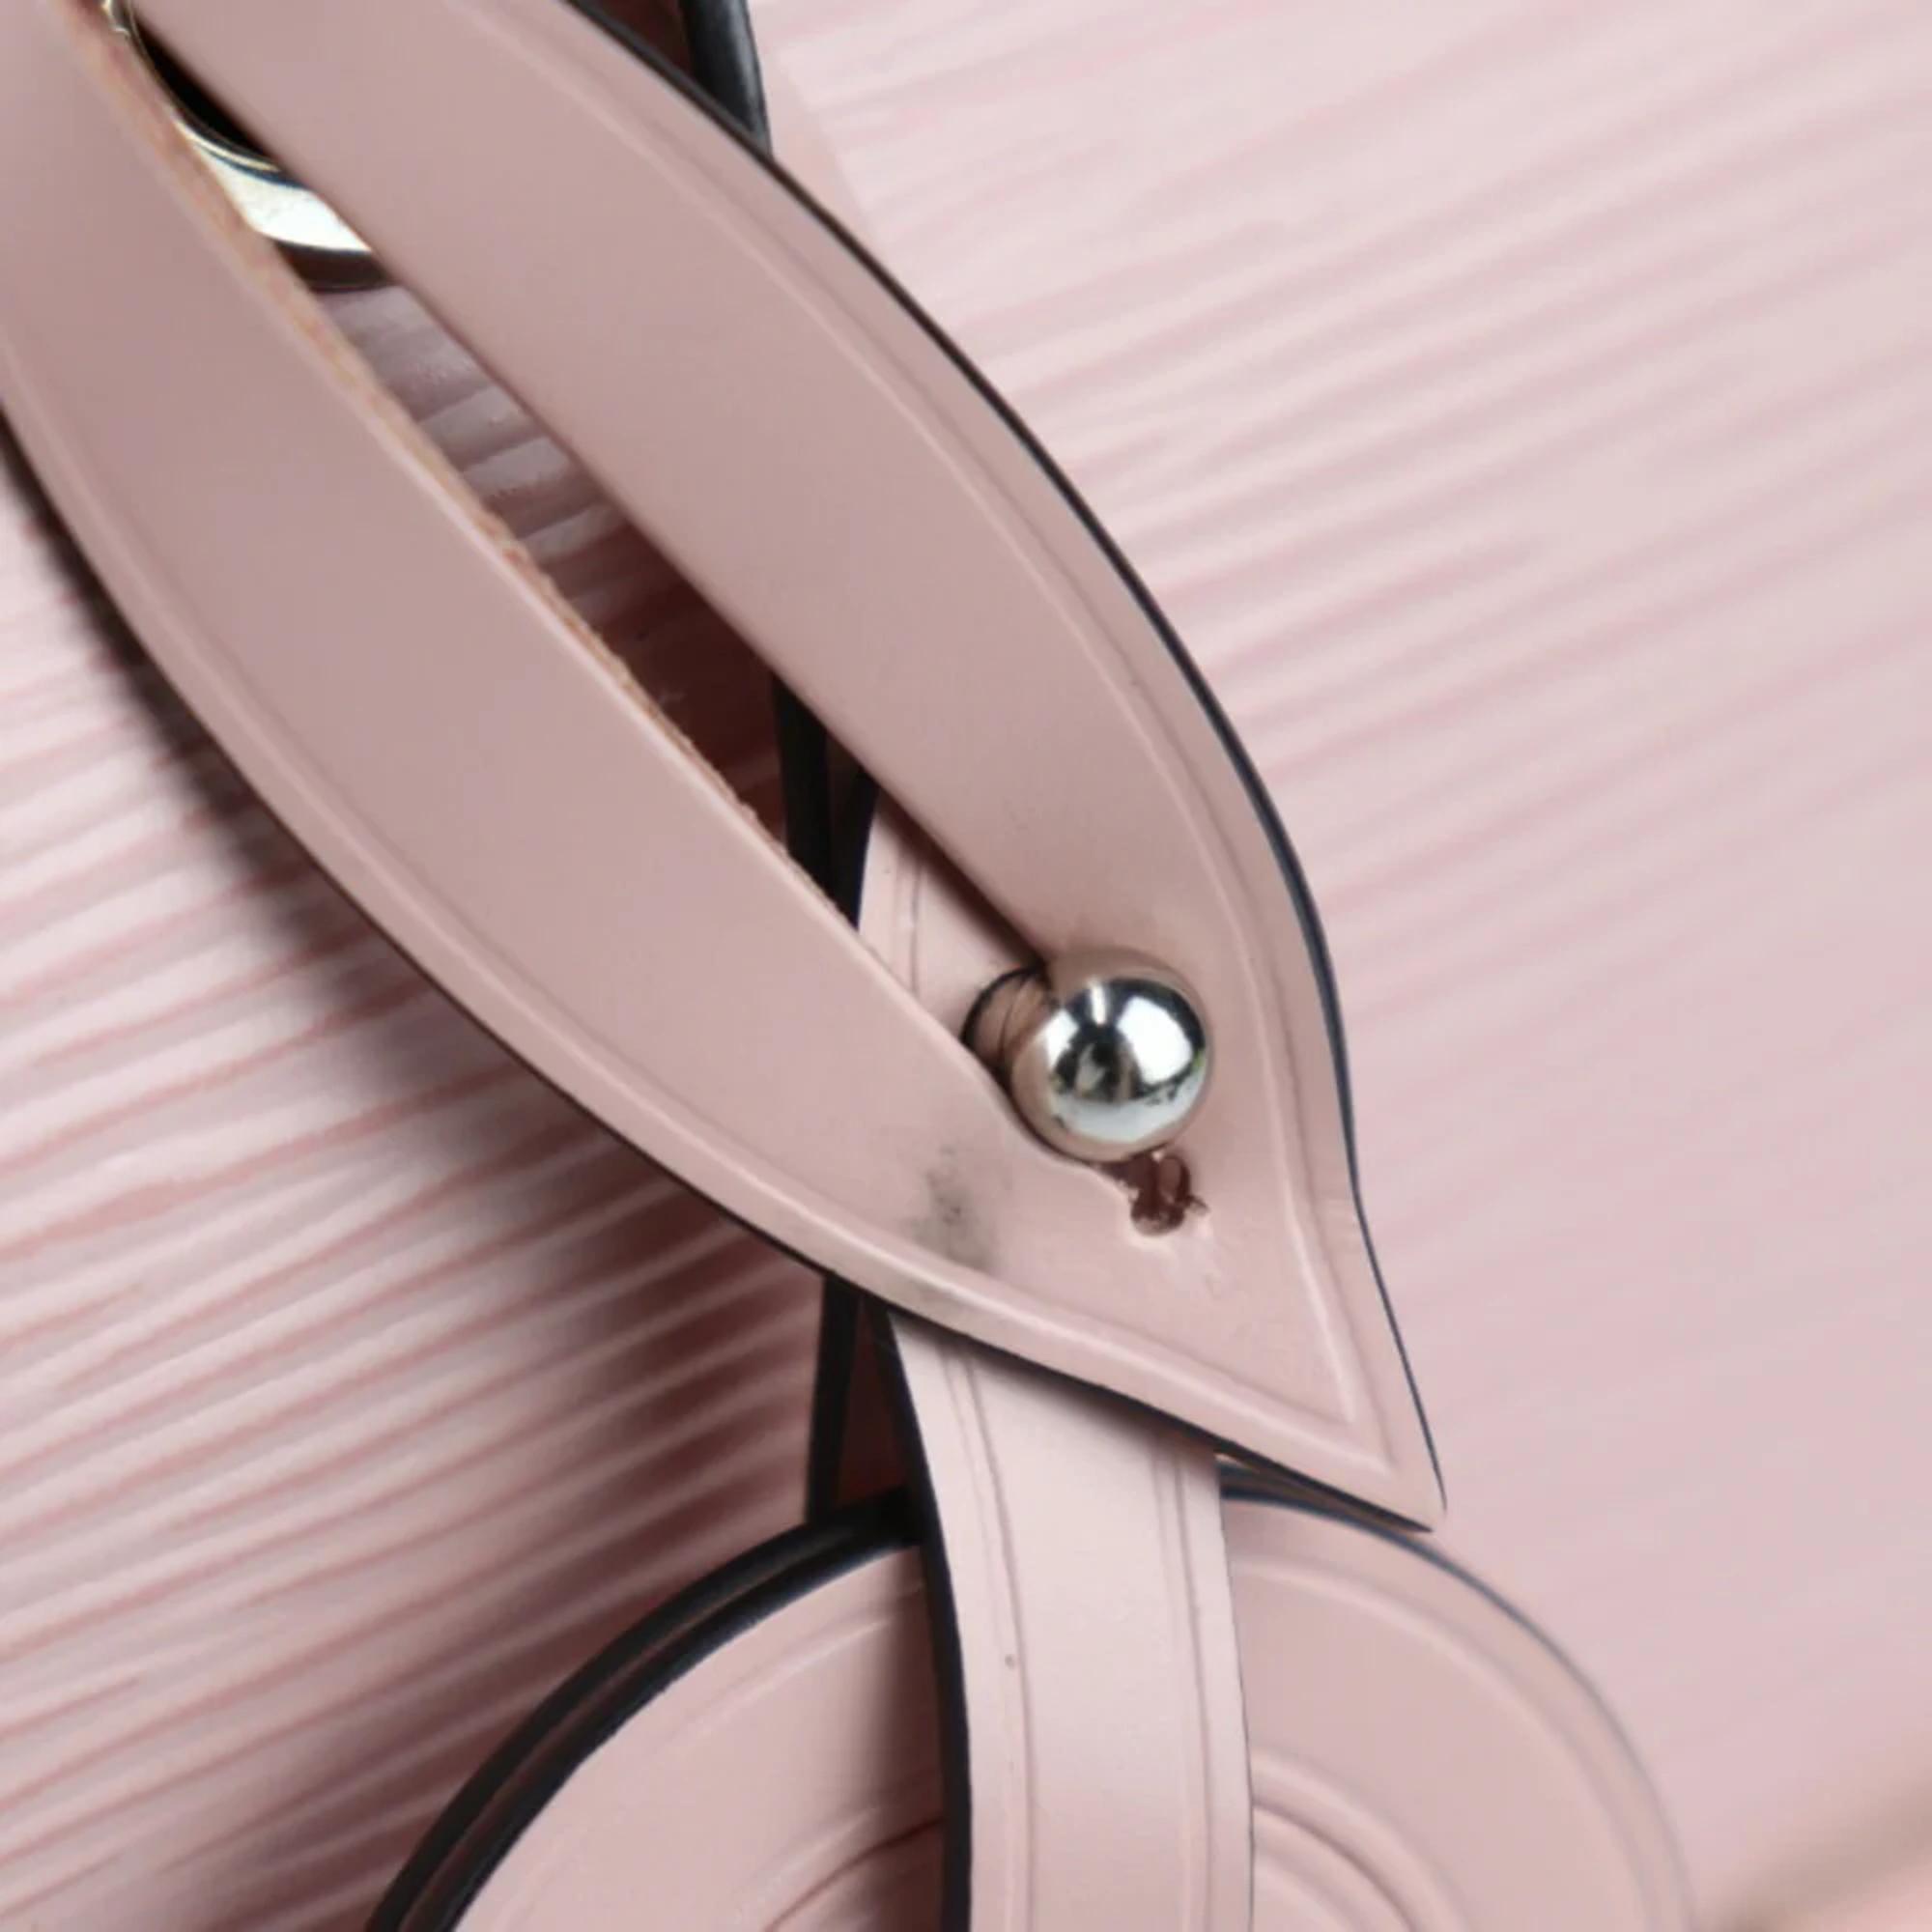 Louis Vuitton Pink Epi Leather Grenelle PM Shoulder Bag